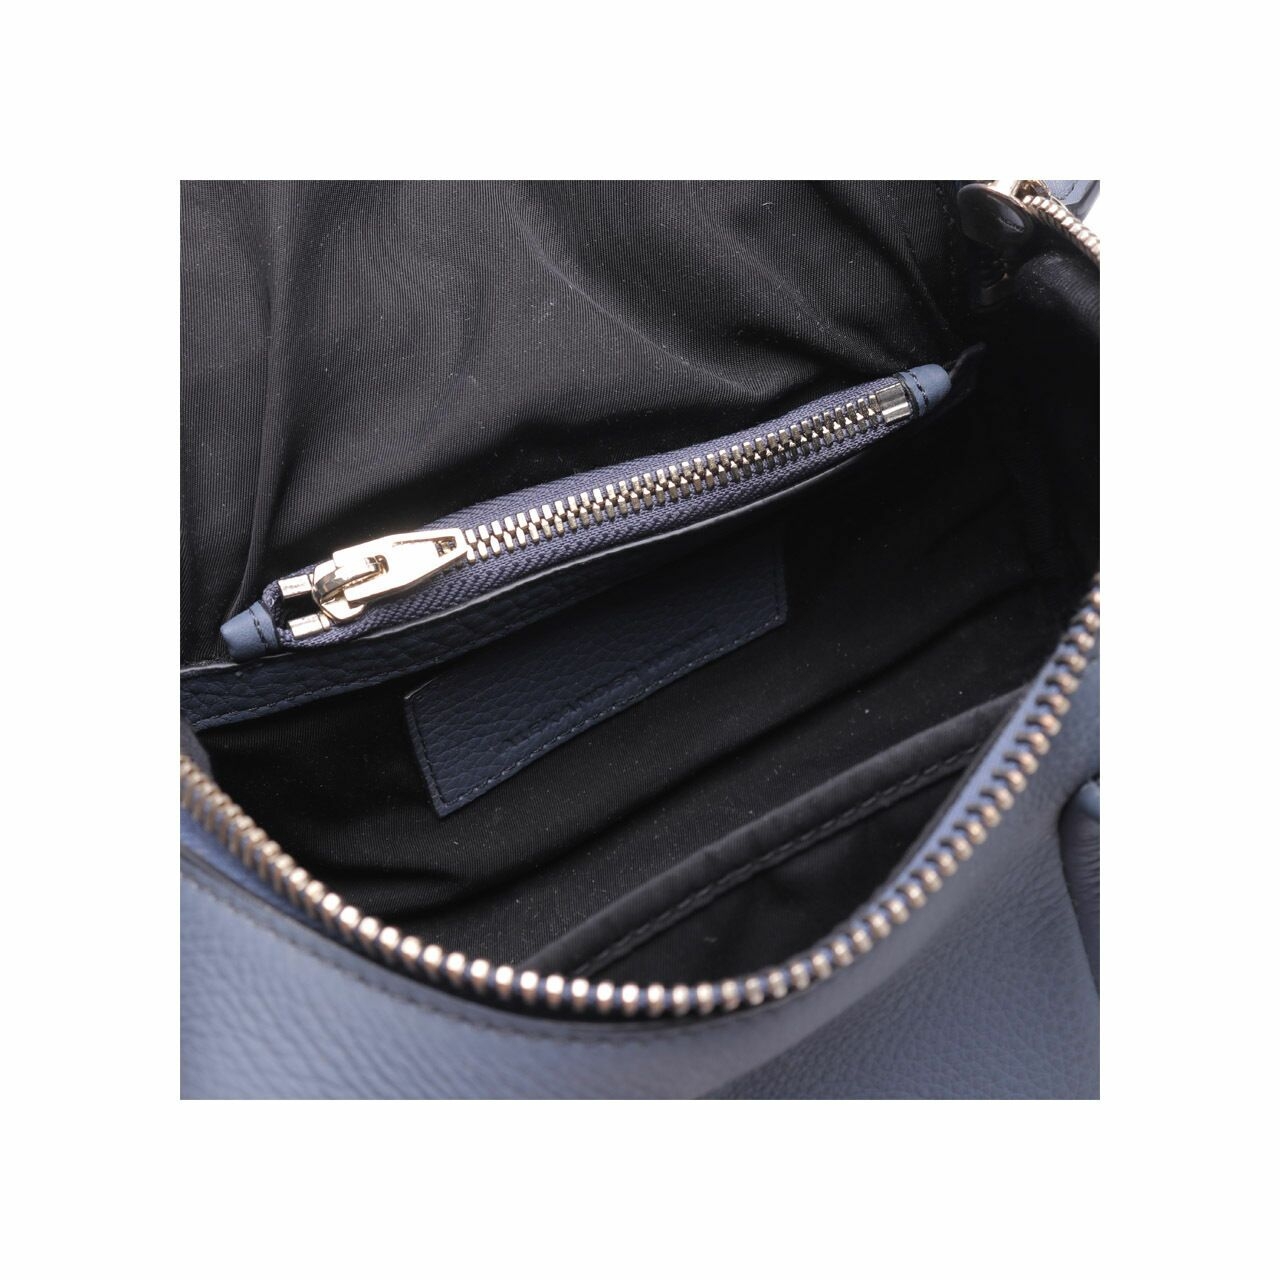 Alexander Wang Blue Leather Mini Rockie Satchel Bag